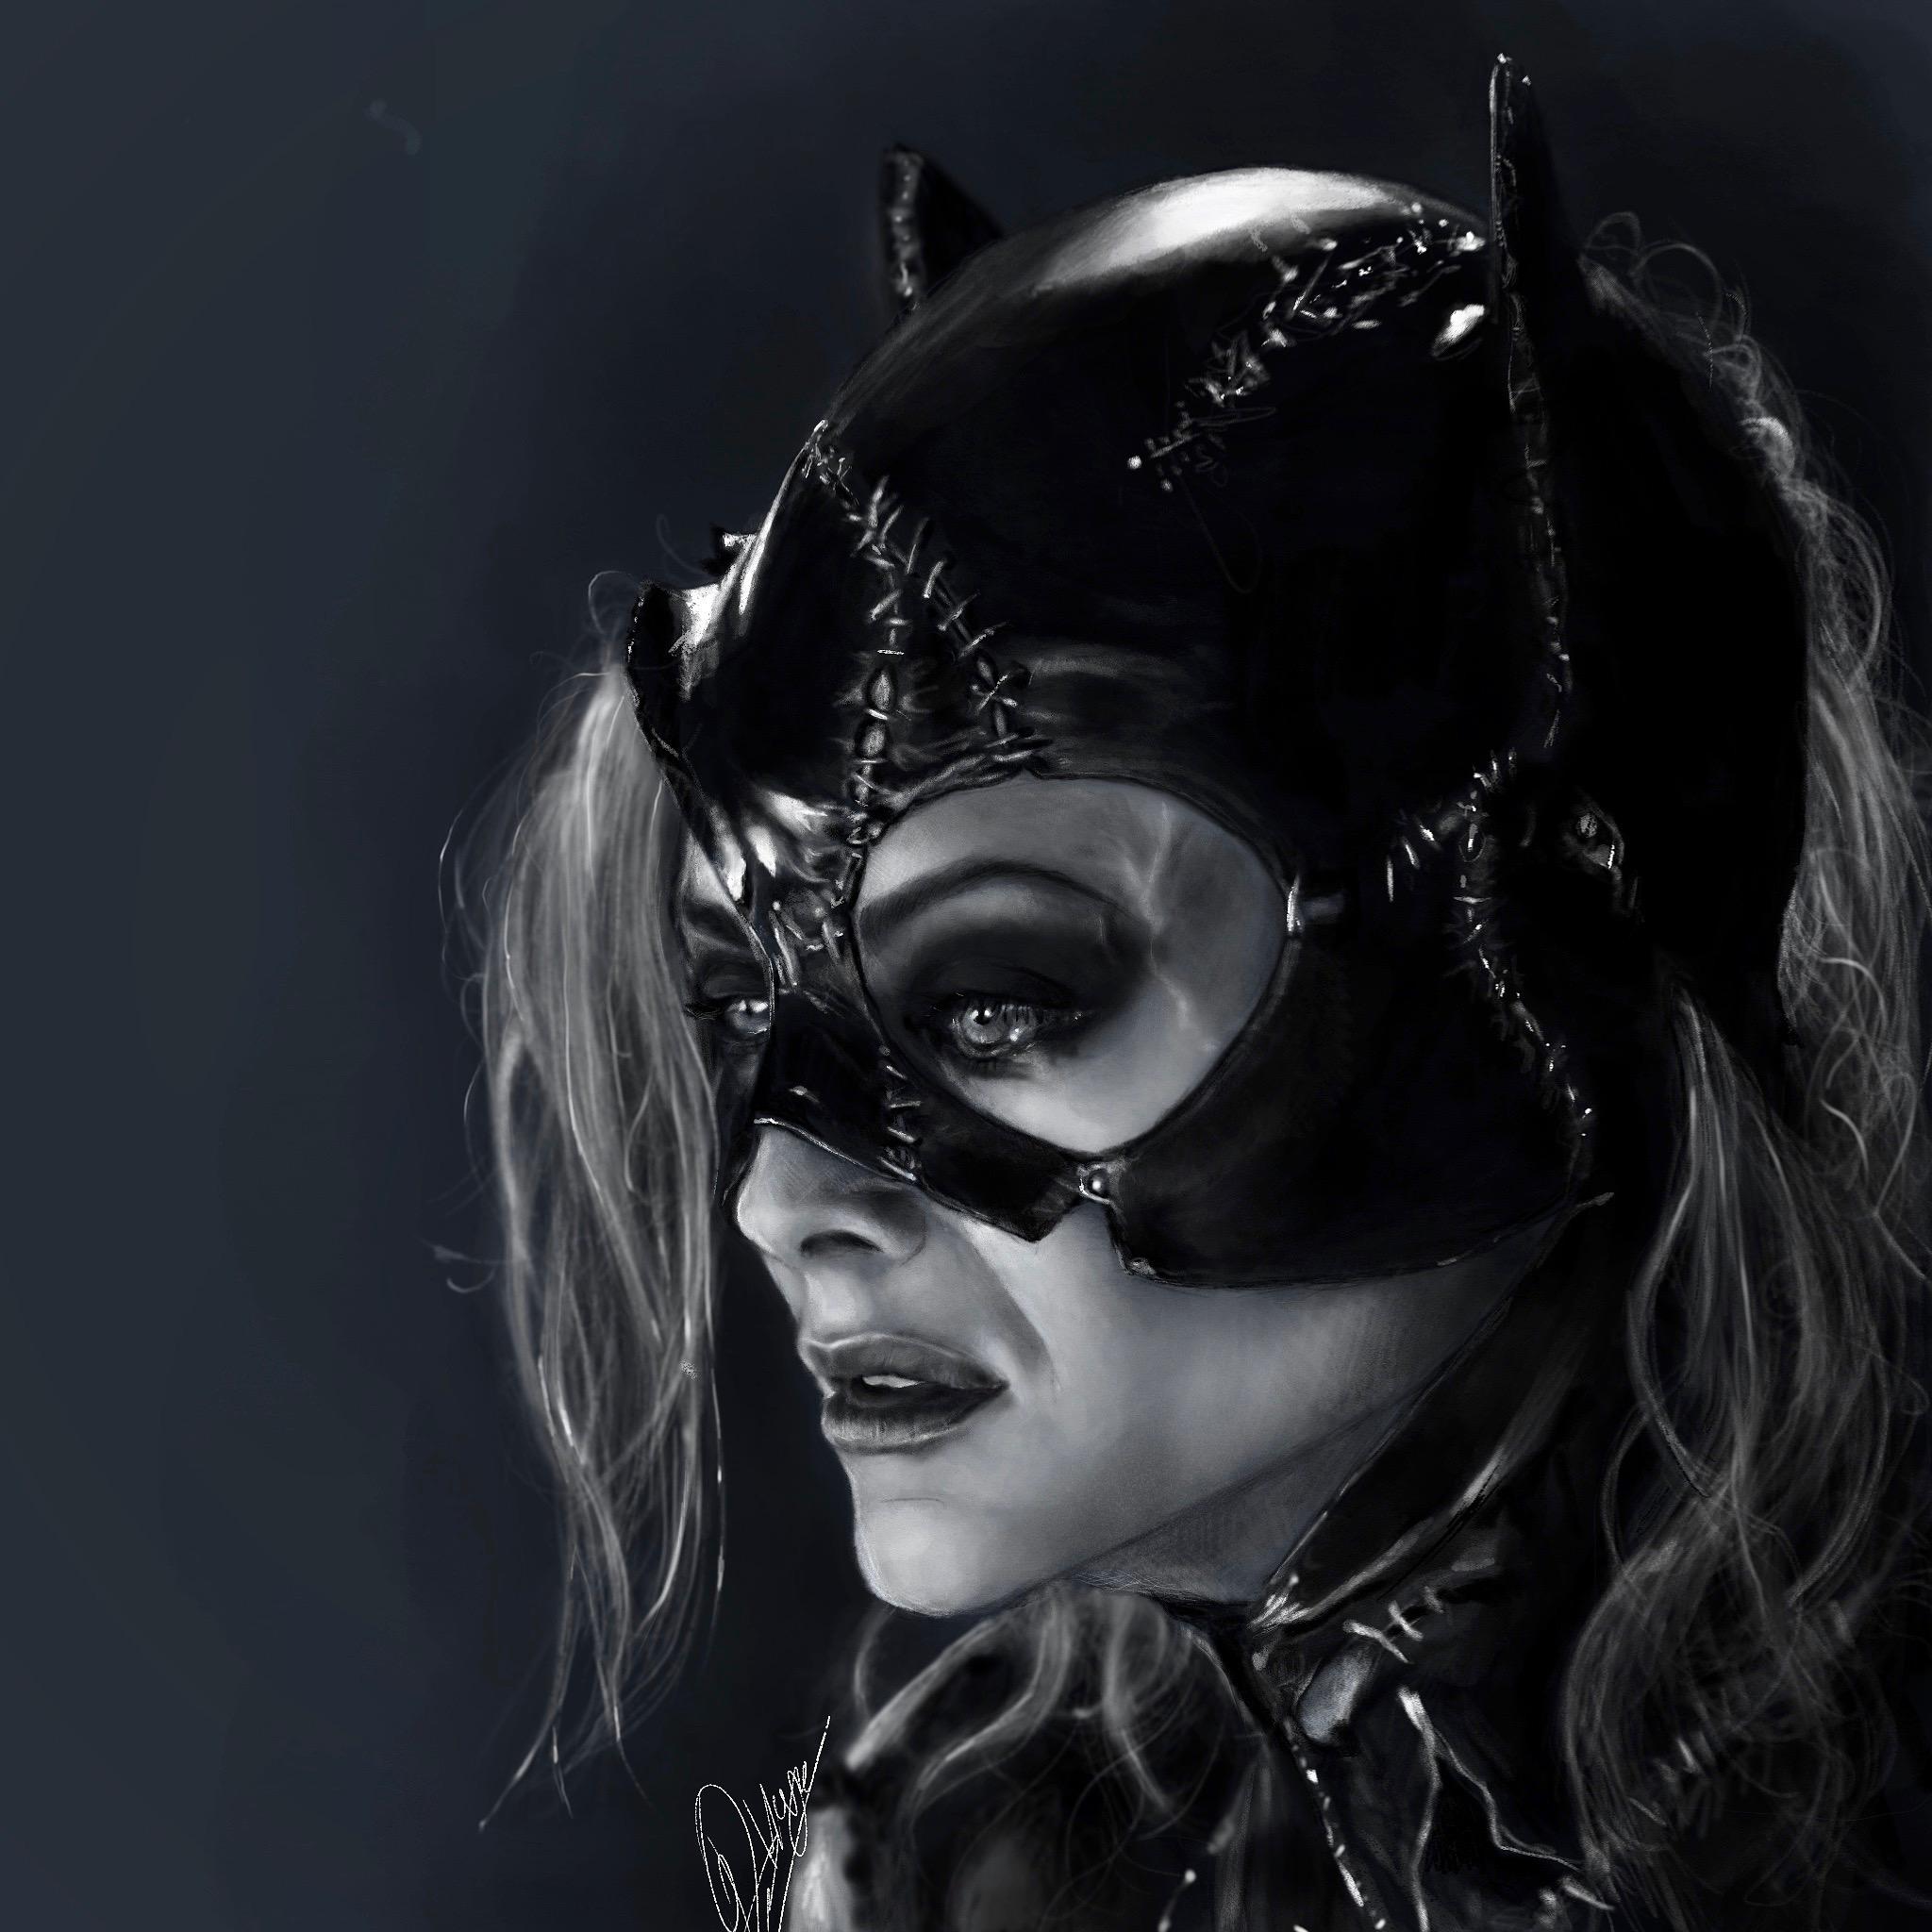 FANART:Michelle Pfeiffer as Catwoman, drawn